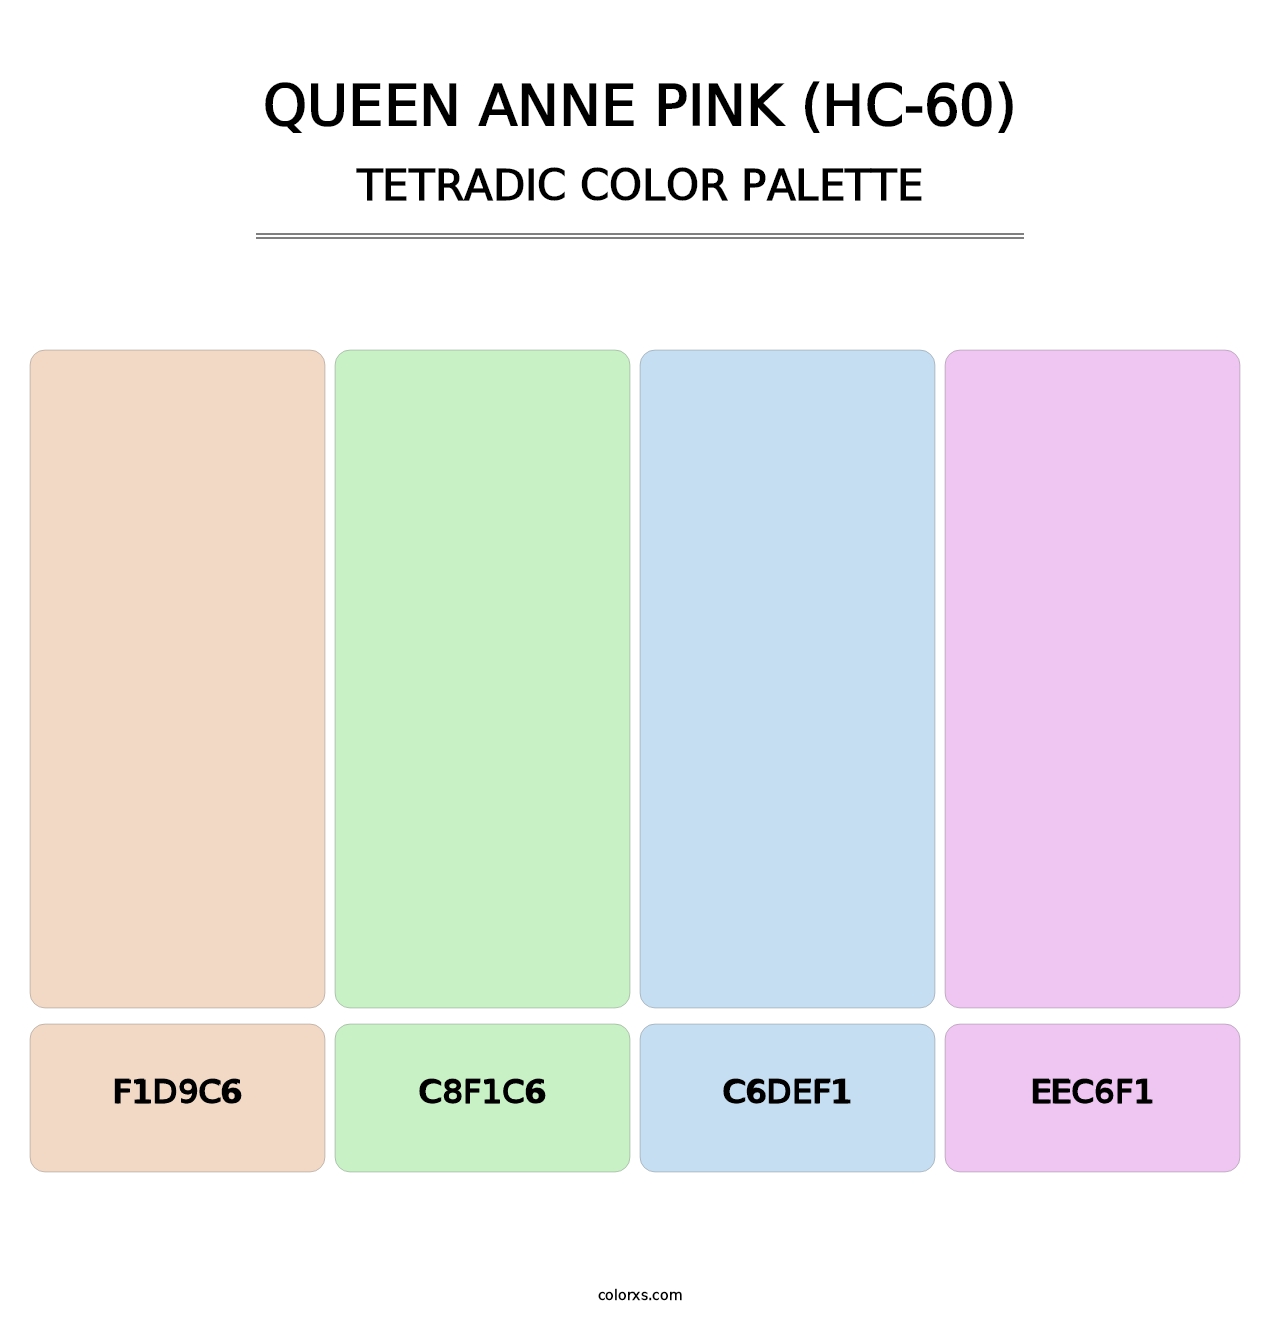 Queen Anne Pink (HC-60) - Tetradic Color Palette